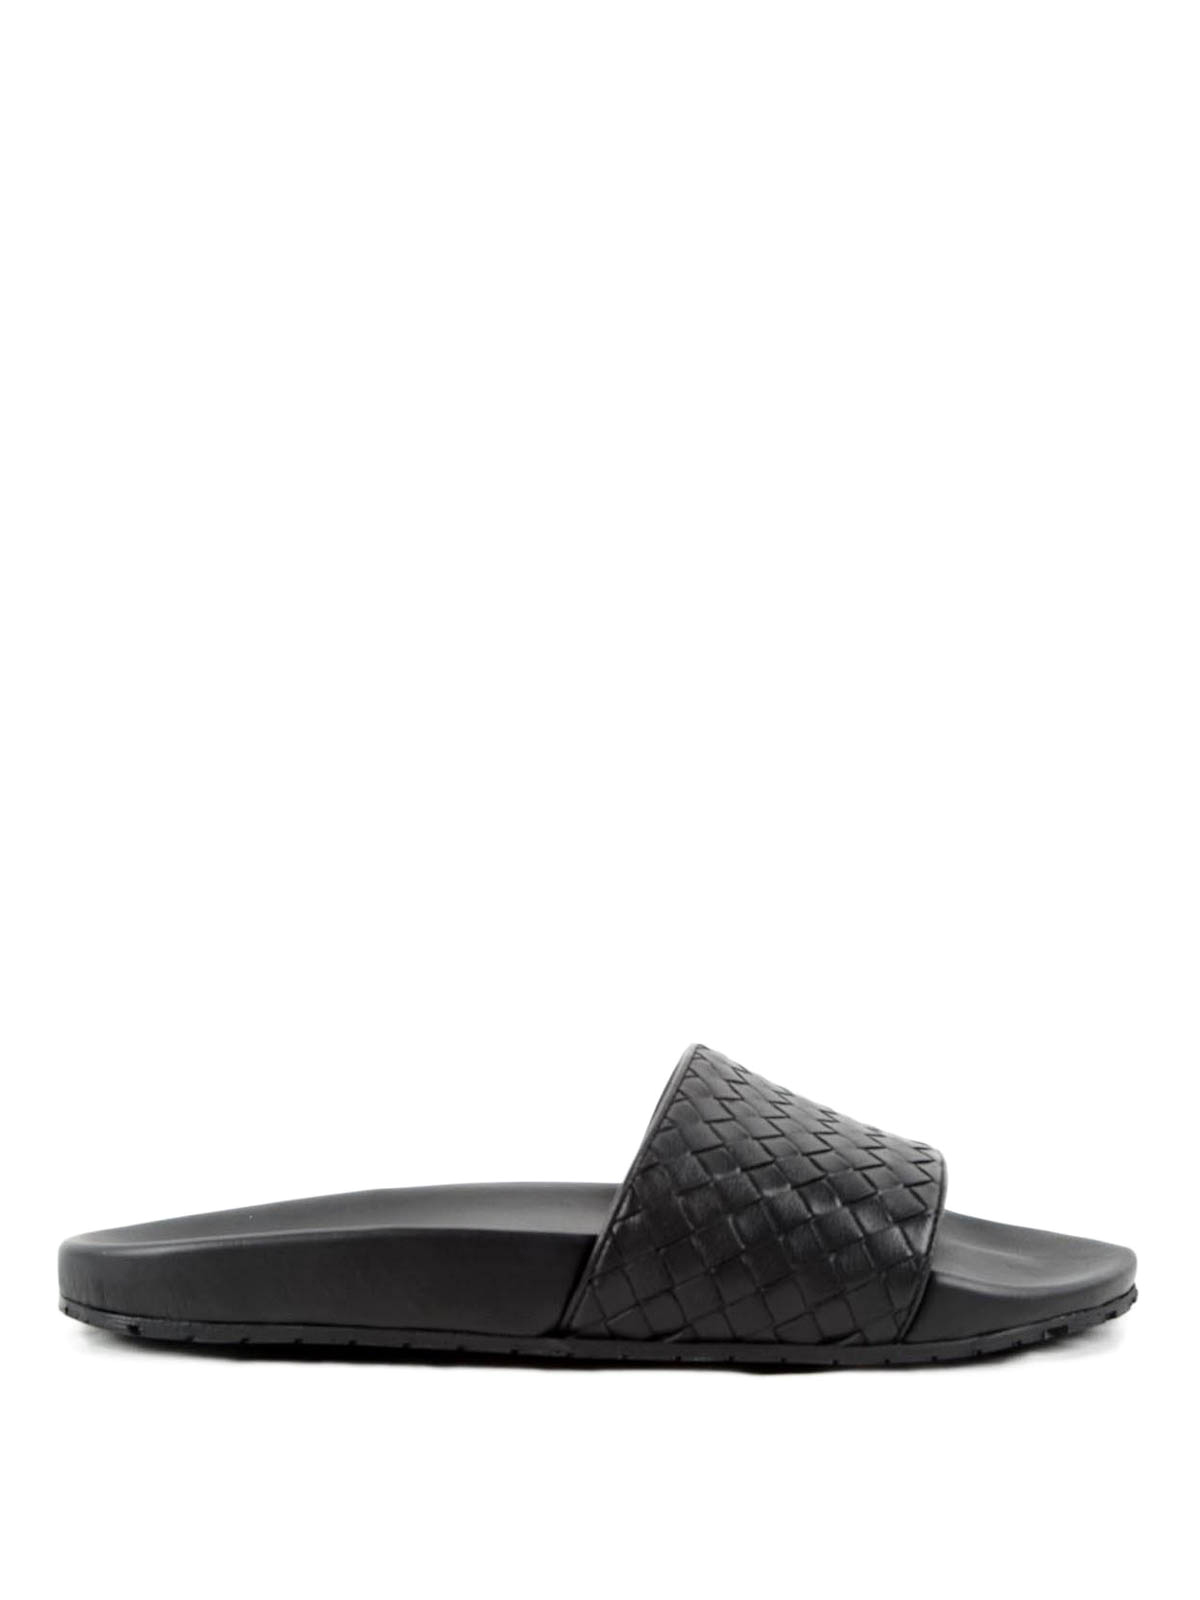 Sandals Bottega Veneta - Intrecciato leather sandals - 440171VT0301000